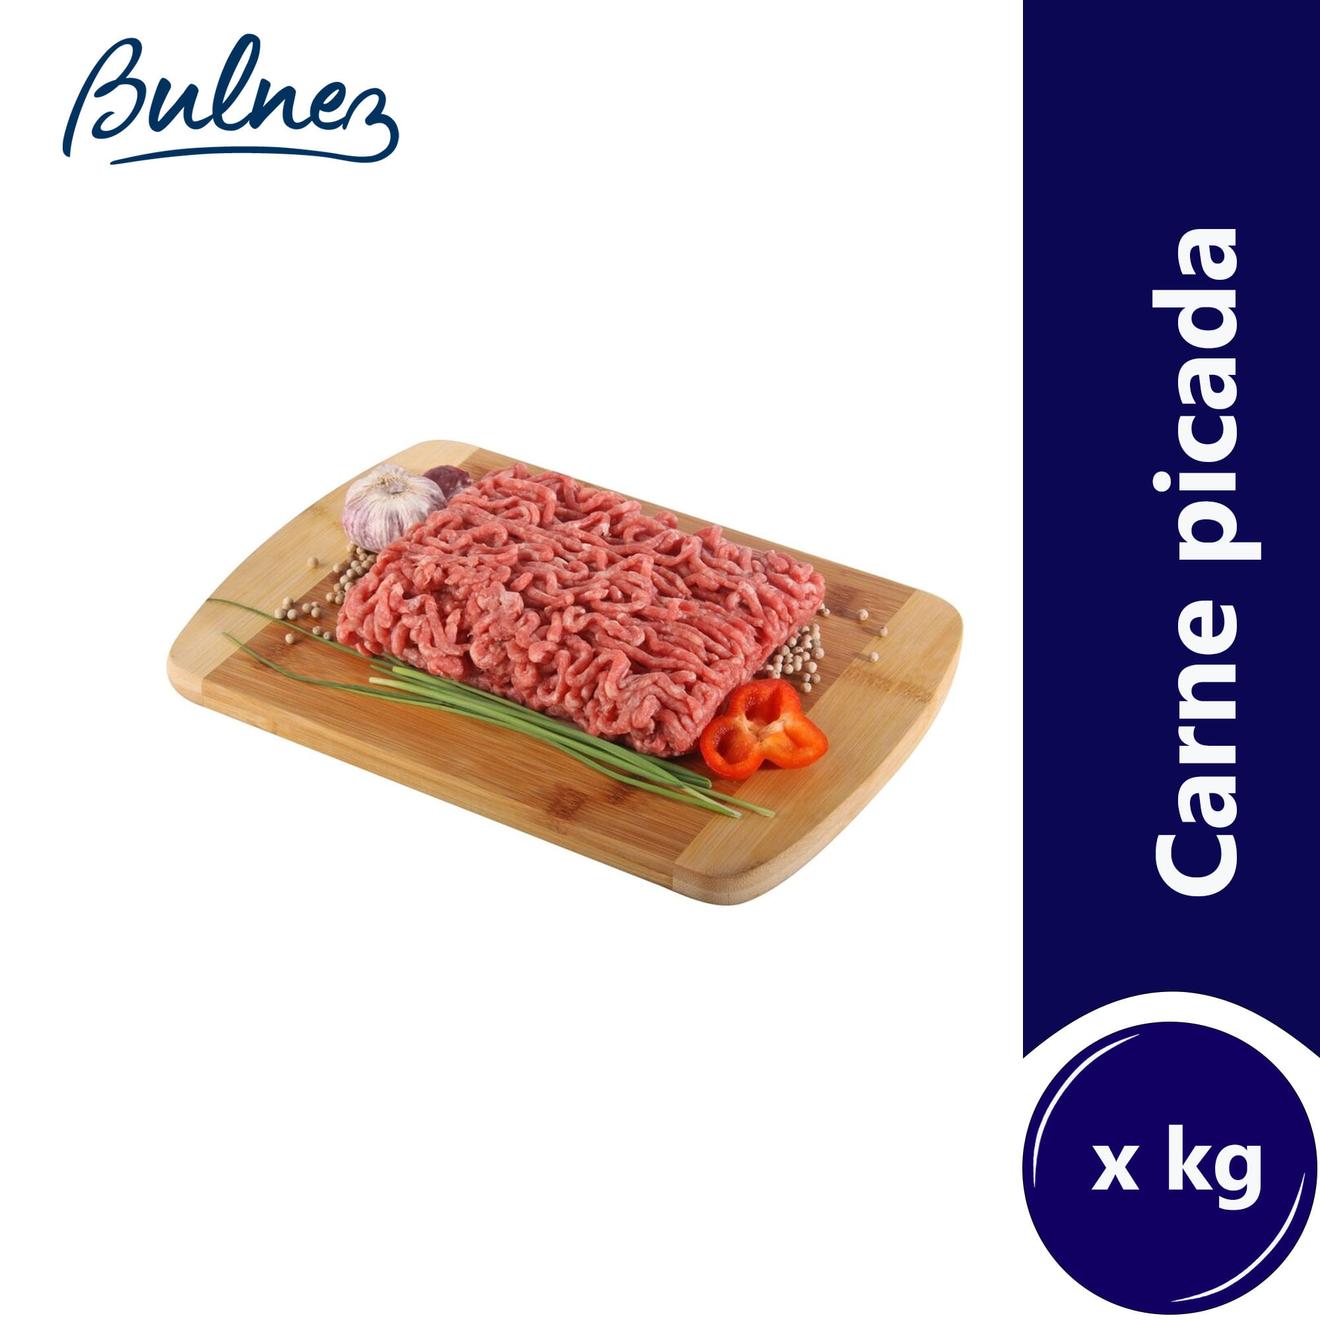 Oferta de Carne picada Bulnez x kg. por $2749 en Carrefour